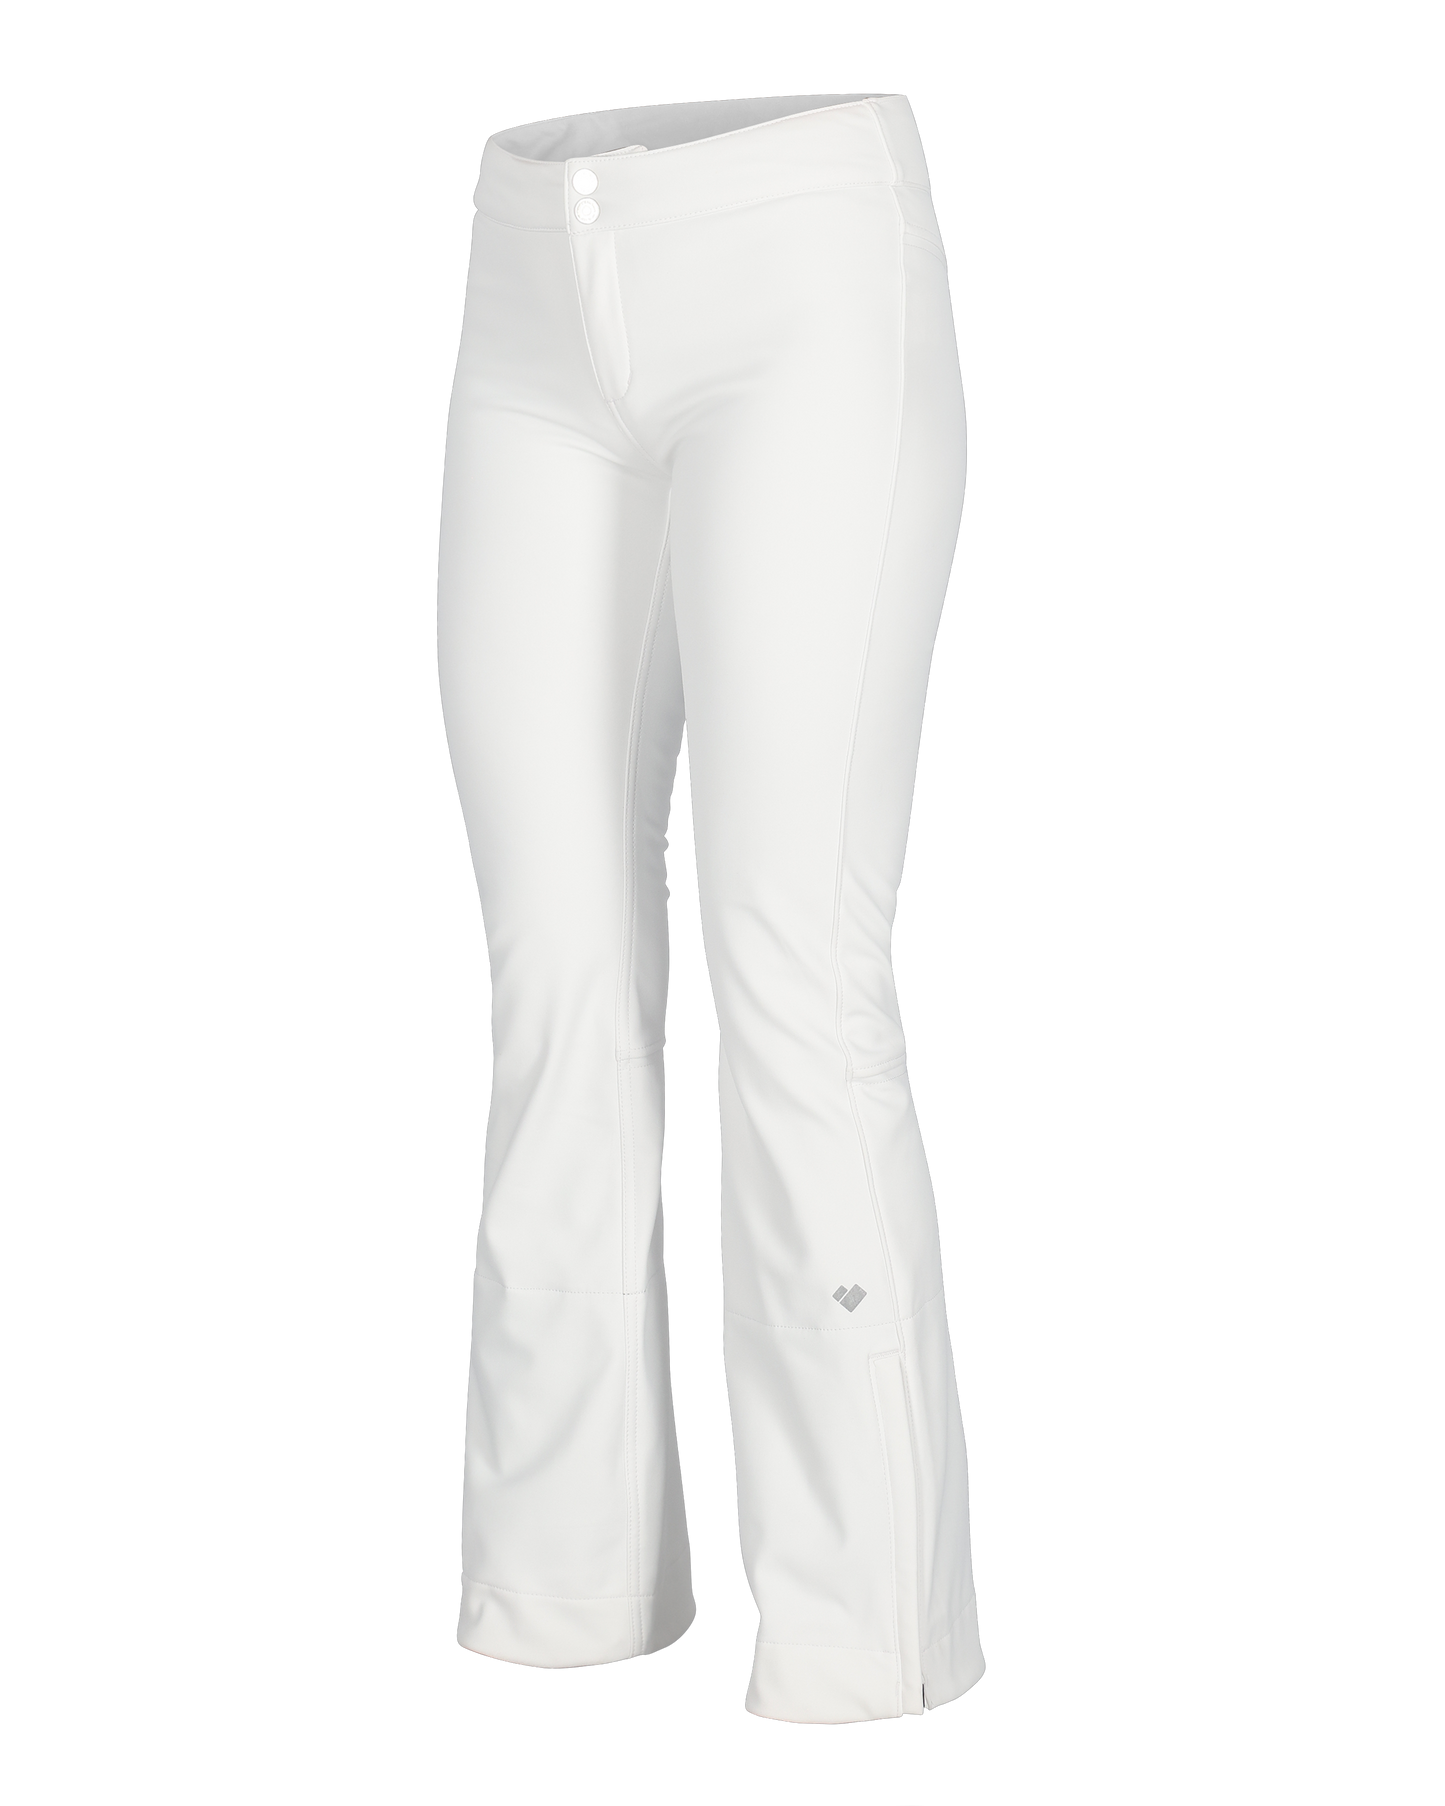 Obermeyer Snow Ski Pants The Bond Pant Black Size Women Size 4 Short